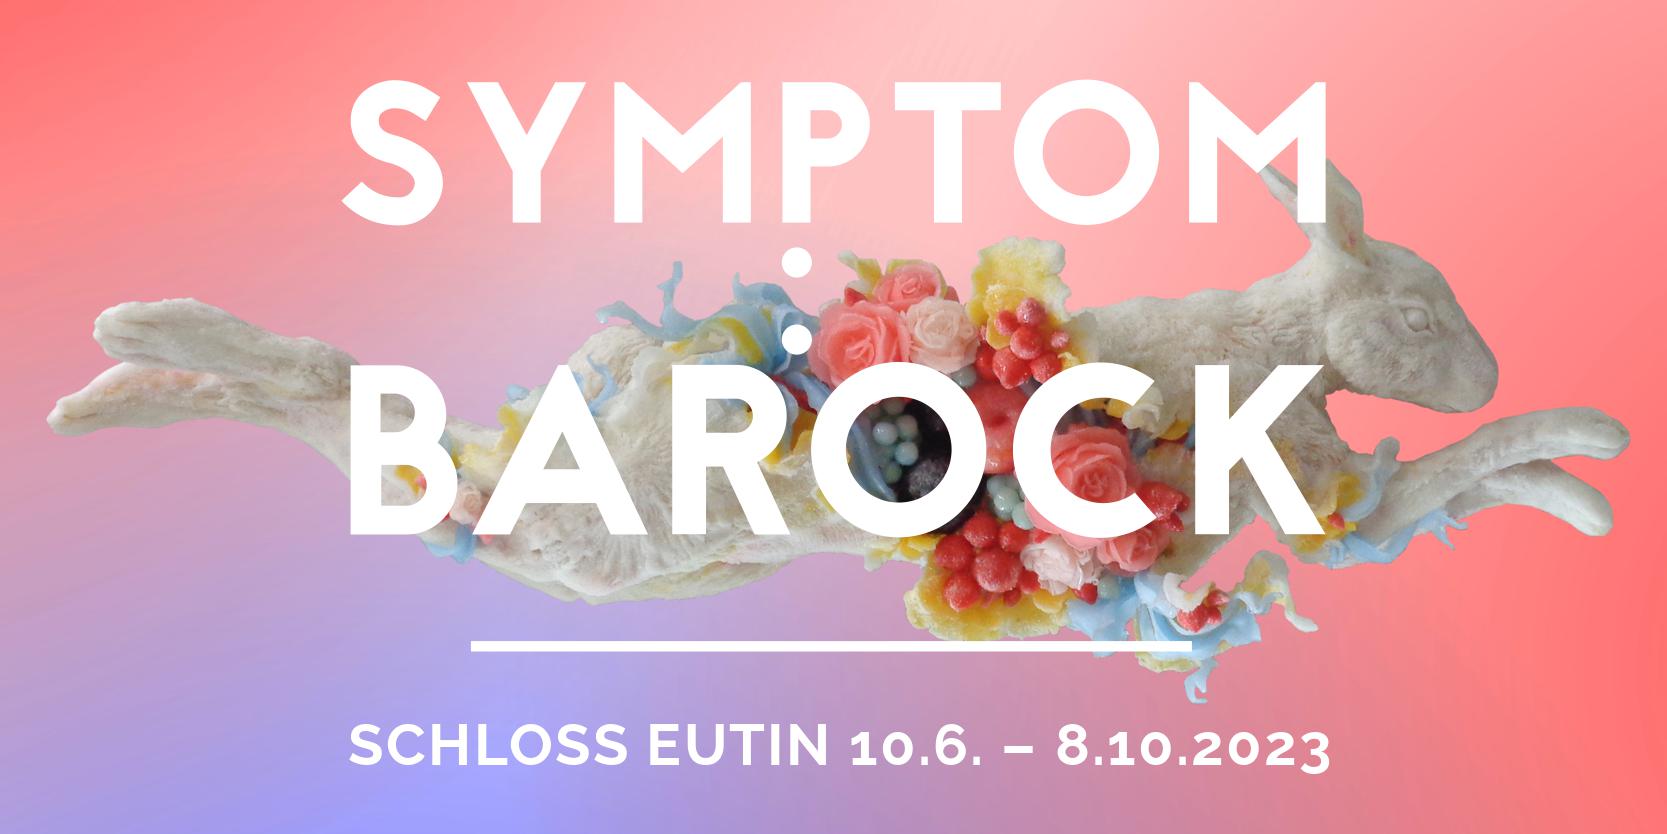 Last call: Symptom:Barock